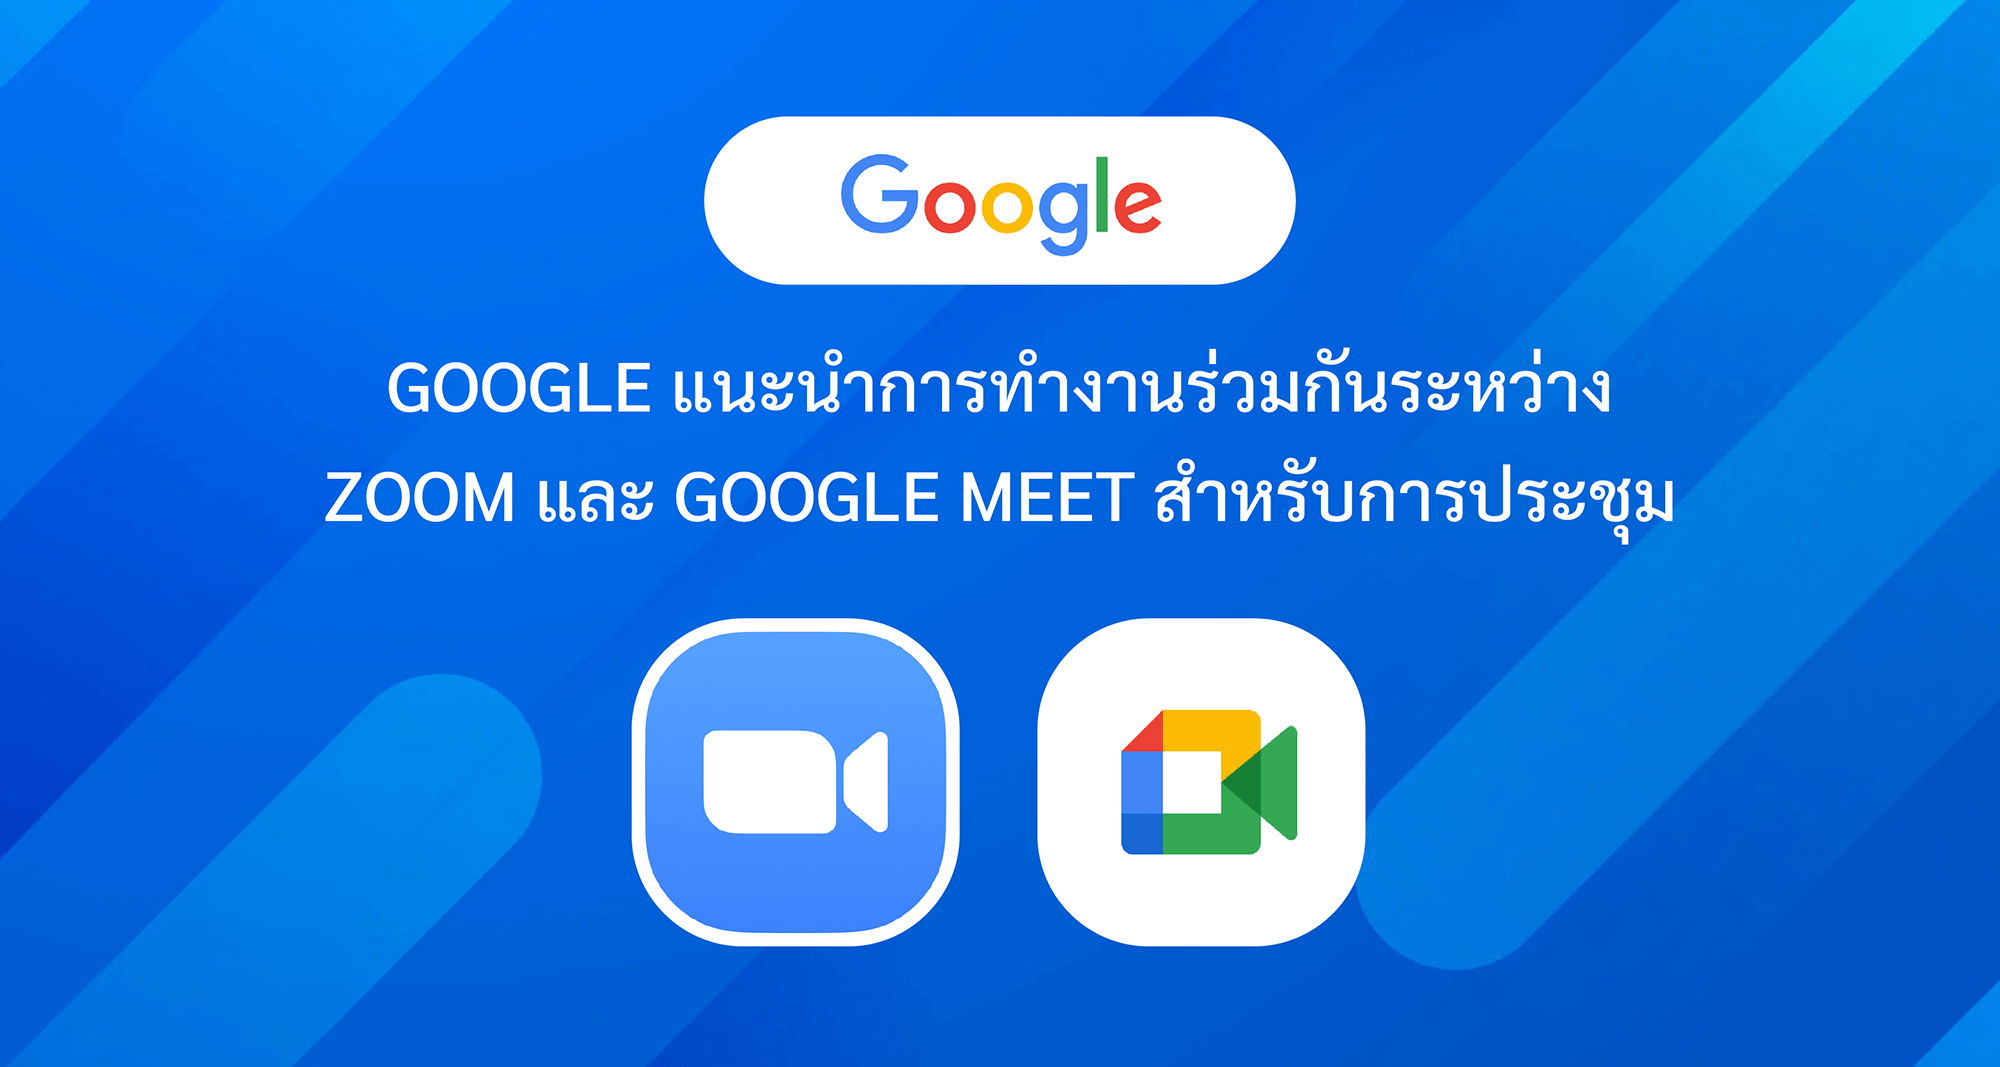 Google แนะนำการทำงานร่วมกันระหว่าง Zoom และ Google Meet สำหรับการประชุม